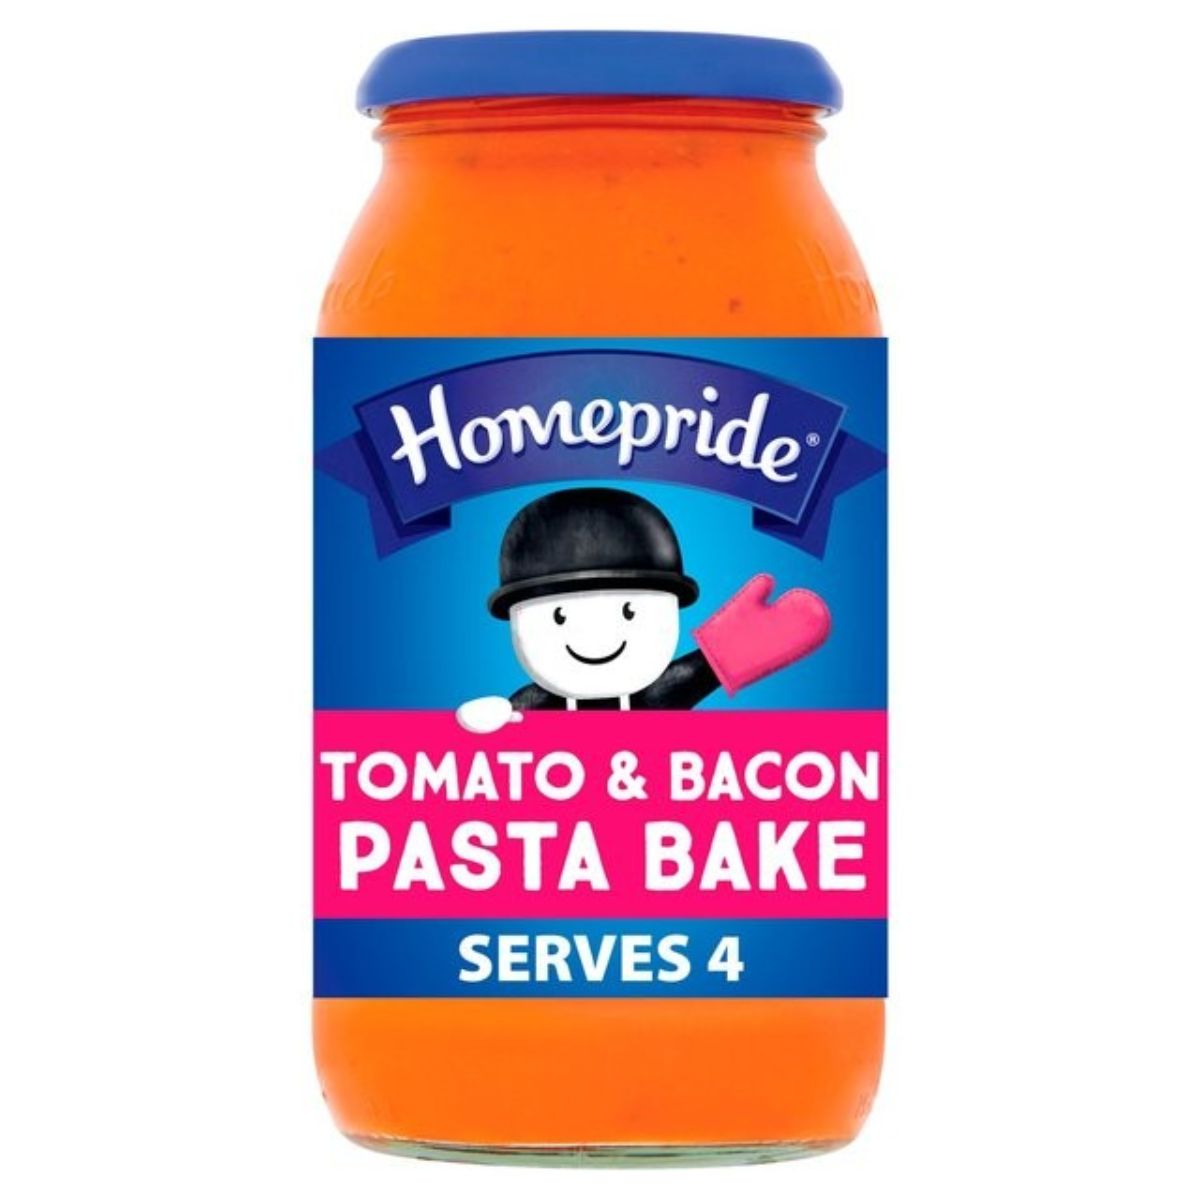 Homepride - Tomato and Bacon Pasta Bake - 450g.